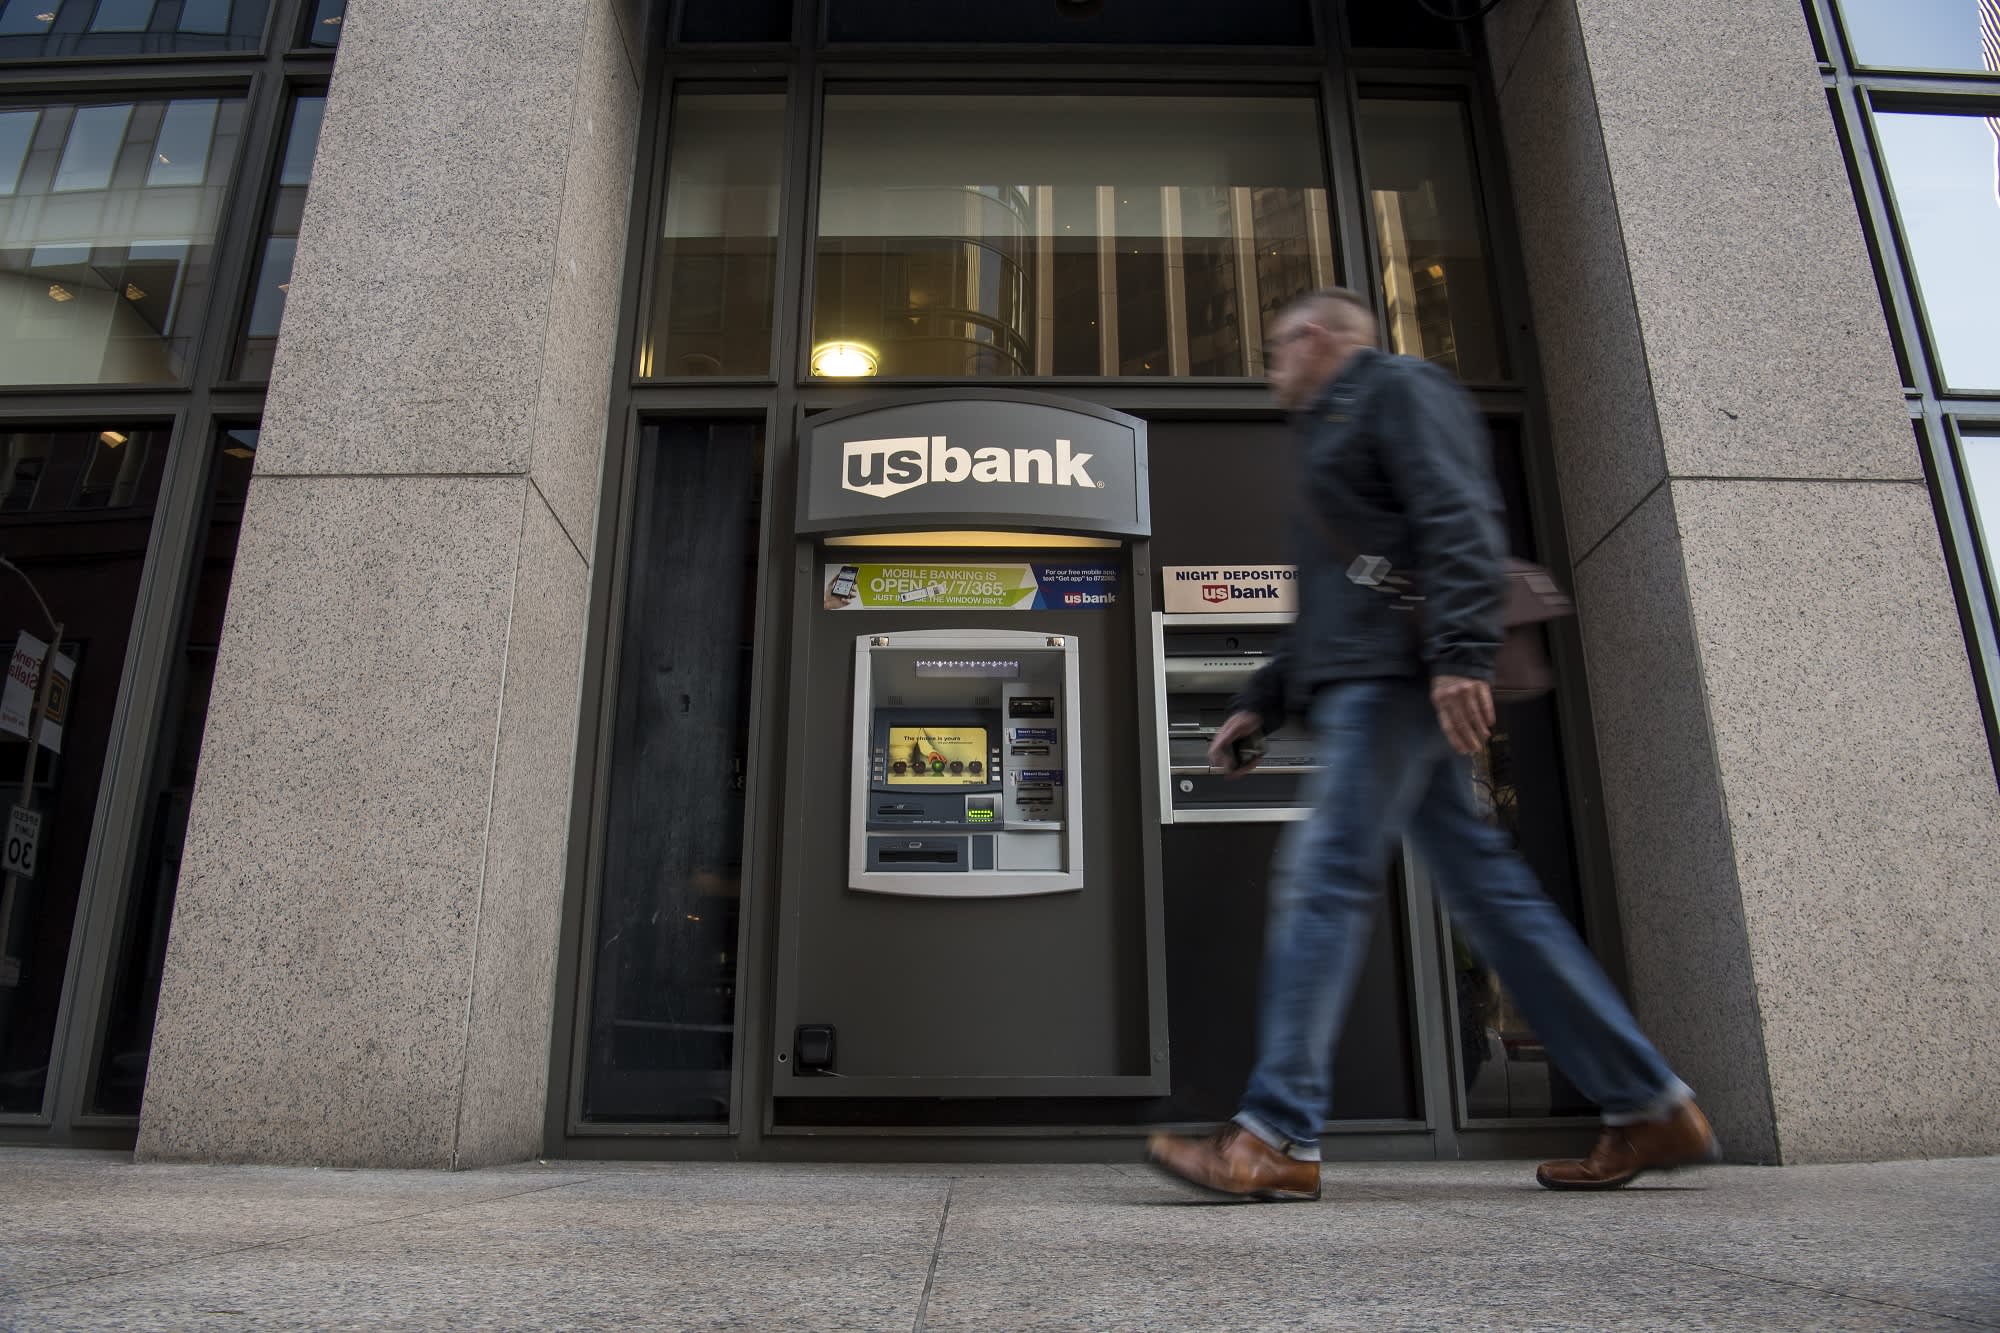 Bank fee. Us Bancorp. Obama's Bank. ABA Bank. Bank fees.